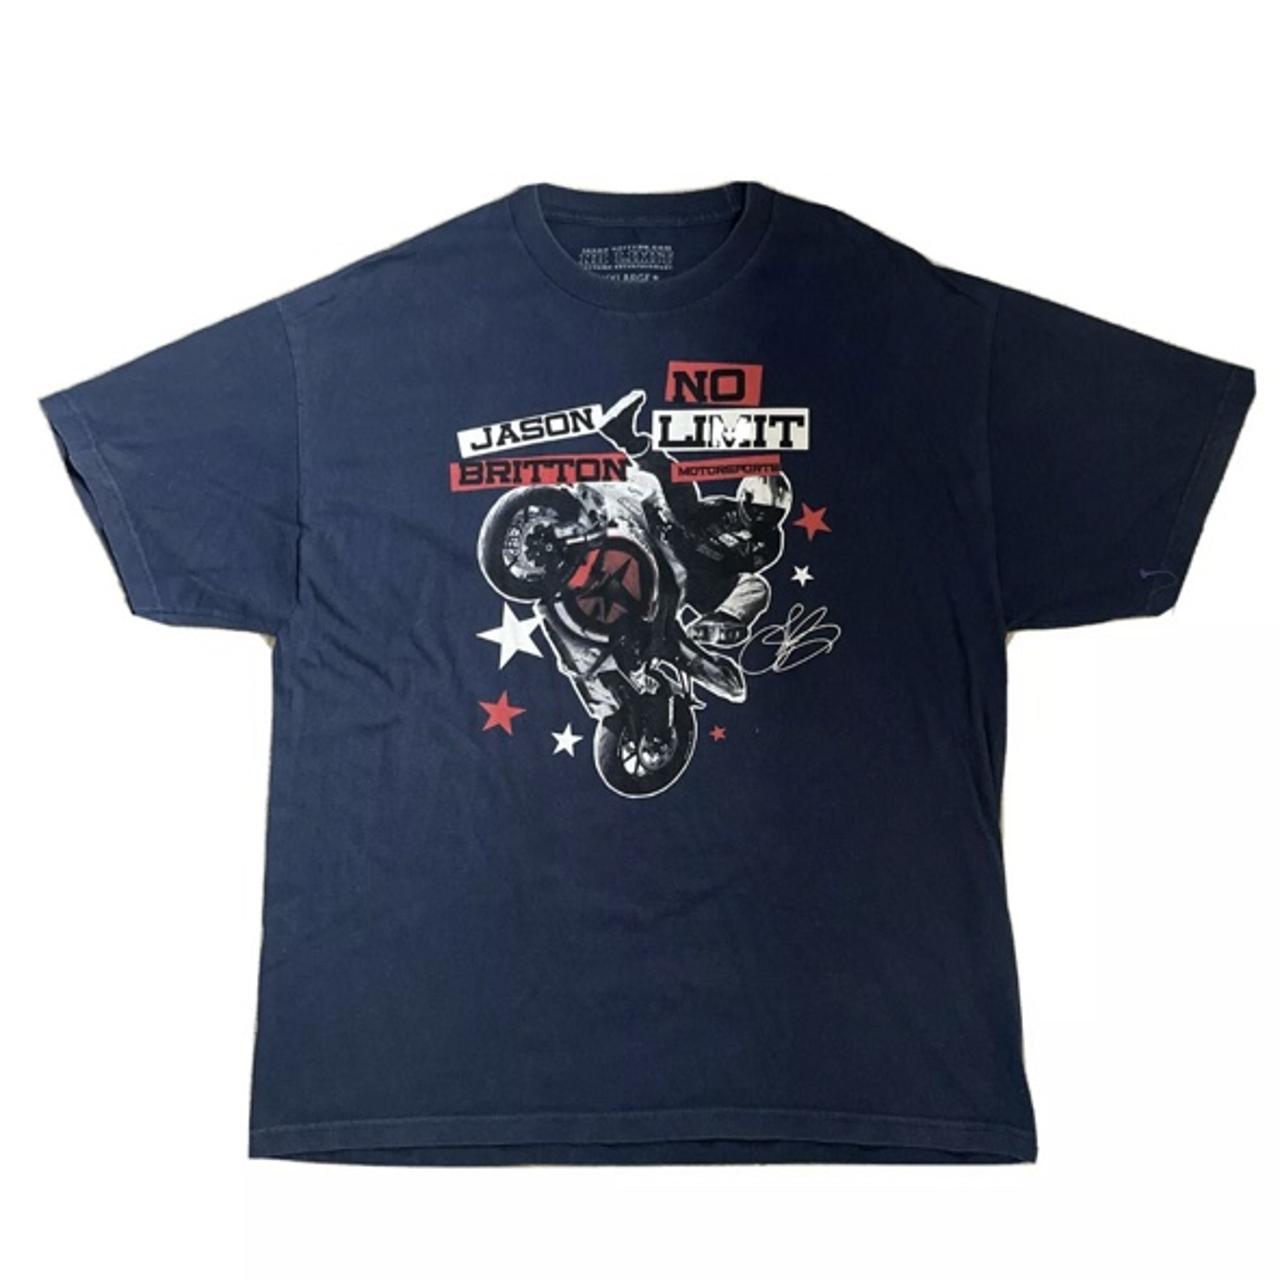 Unbranded Men's Navy T-shirt